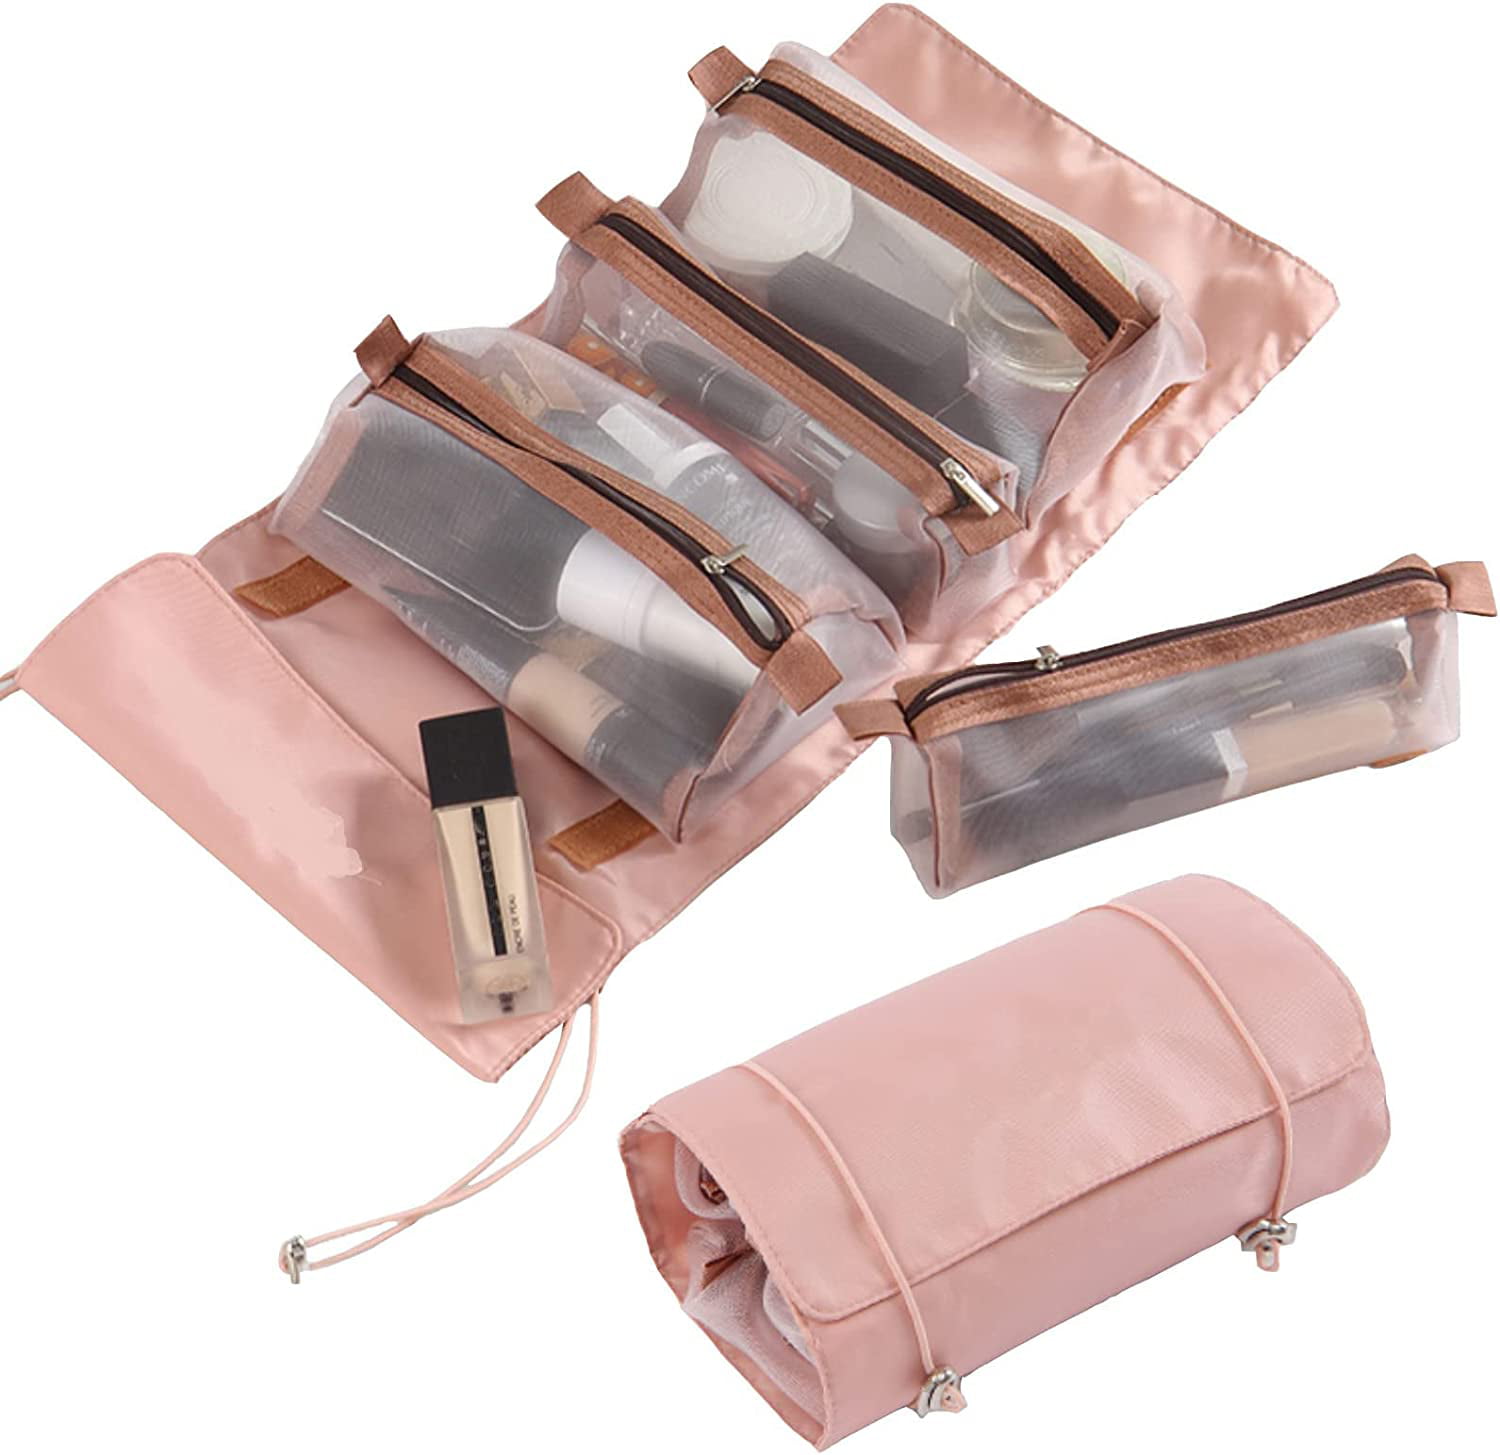 Checkered Makeup Bag, 2Pcs Travel Cosmetic Bags - Portable